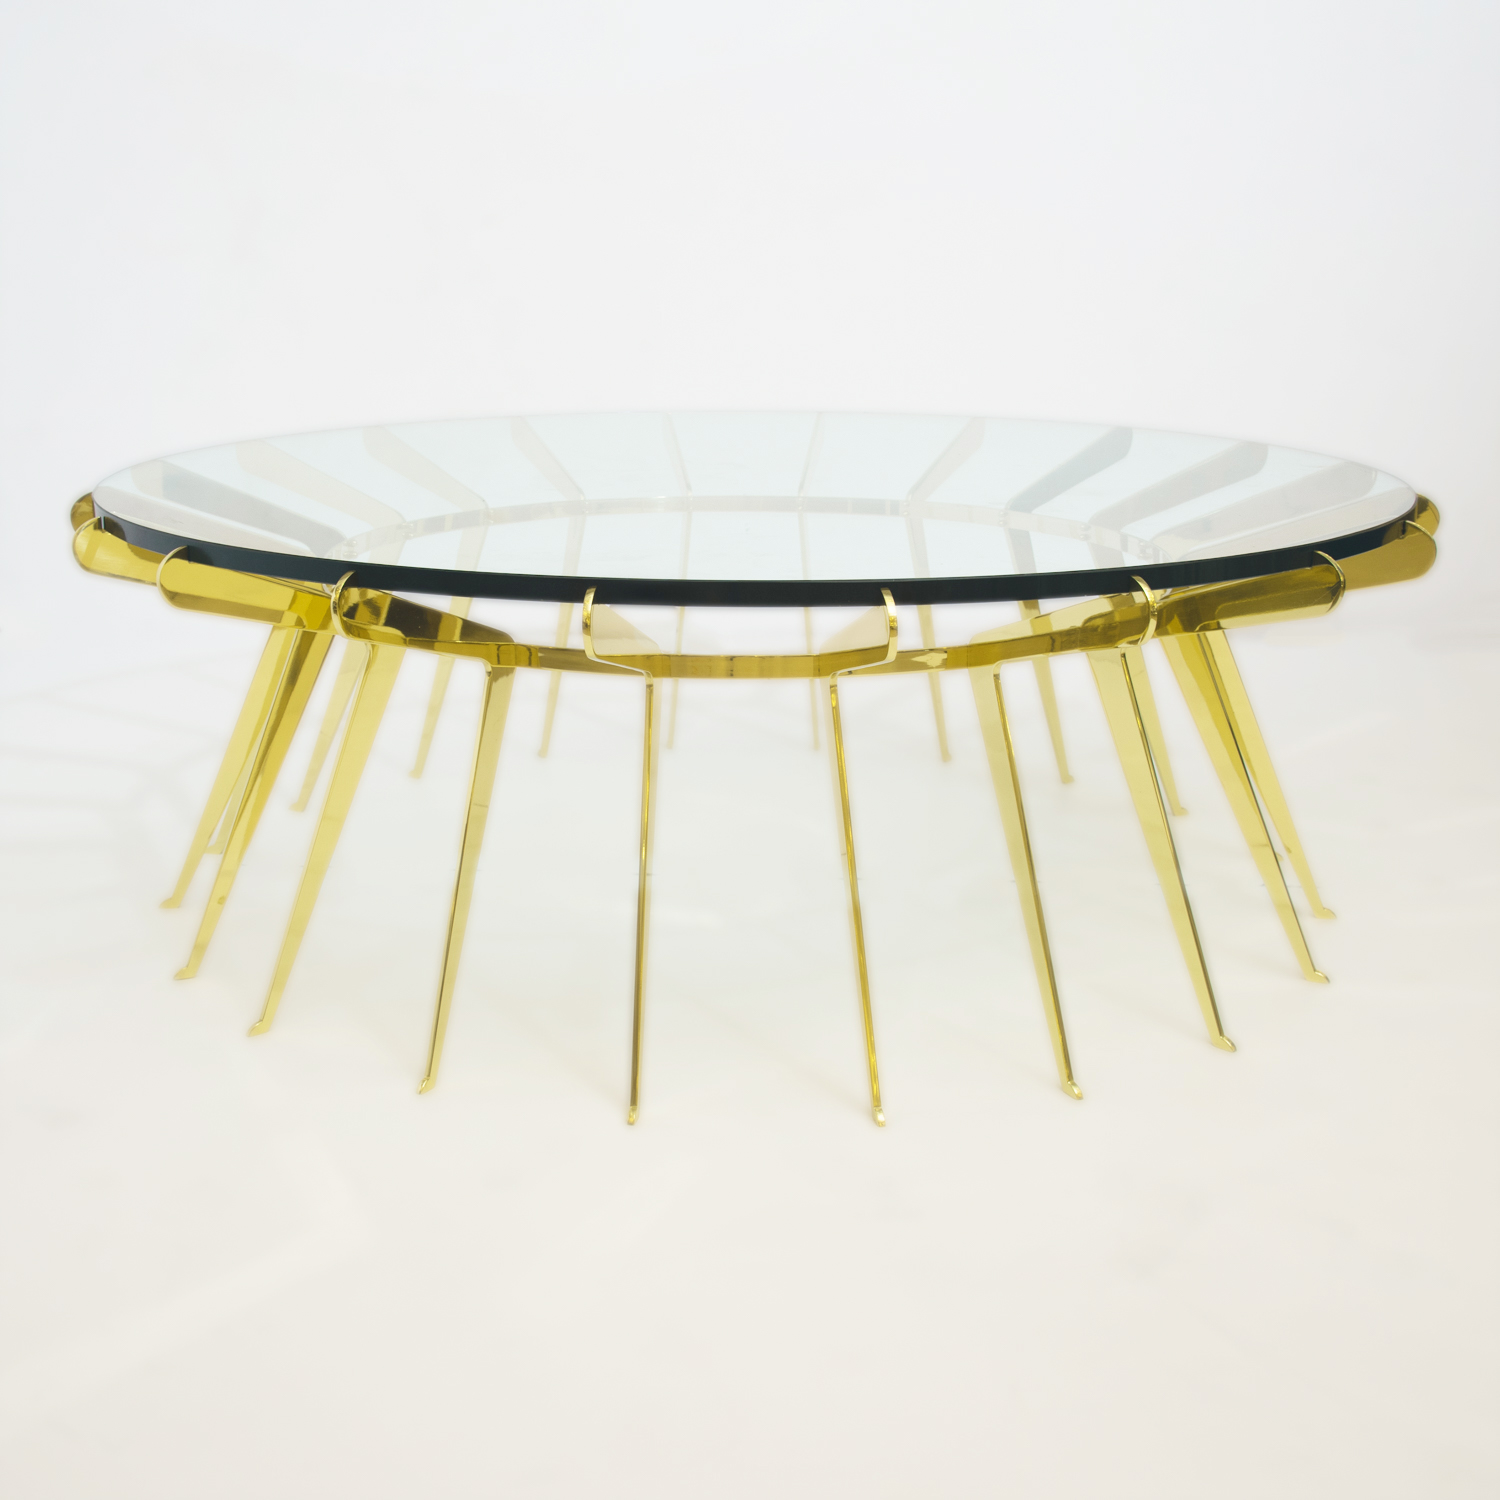 Form A Solare Table, gaspare asaro